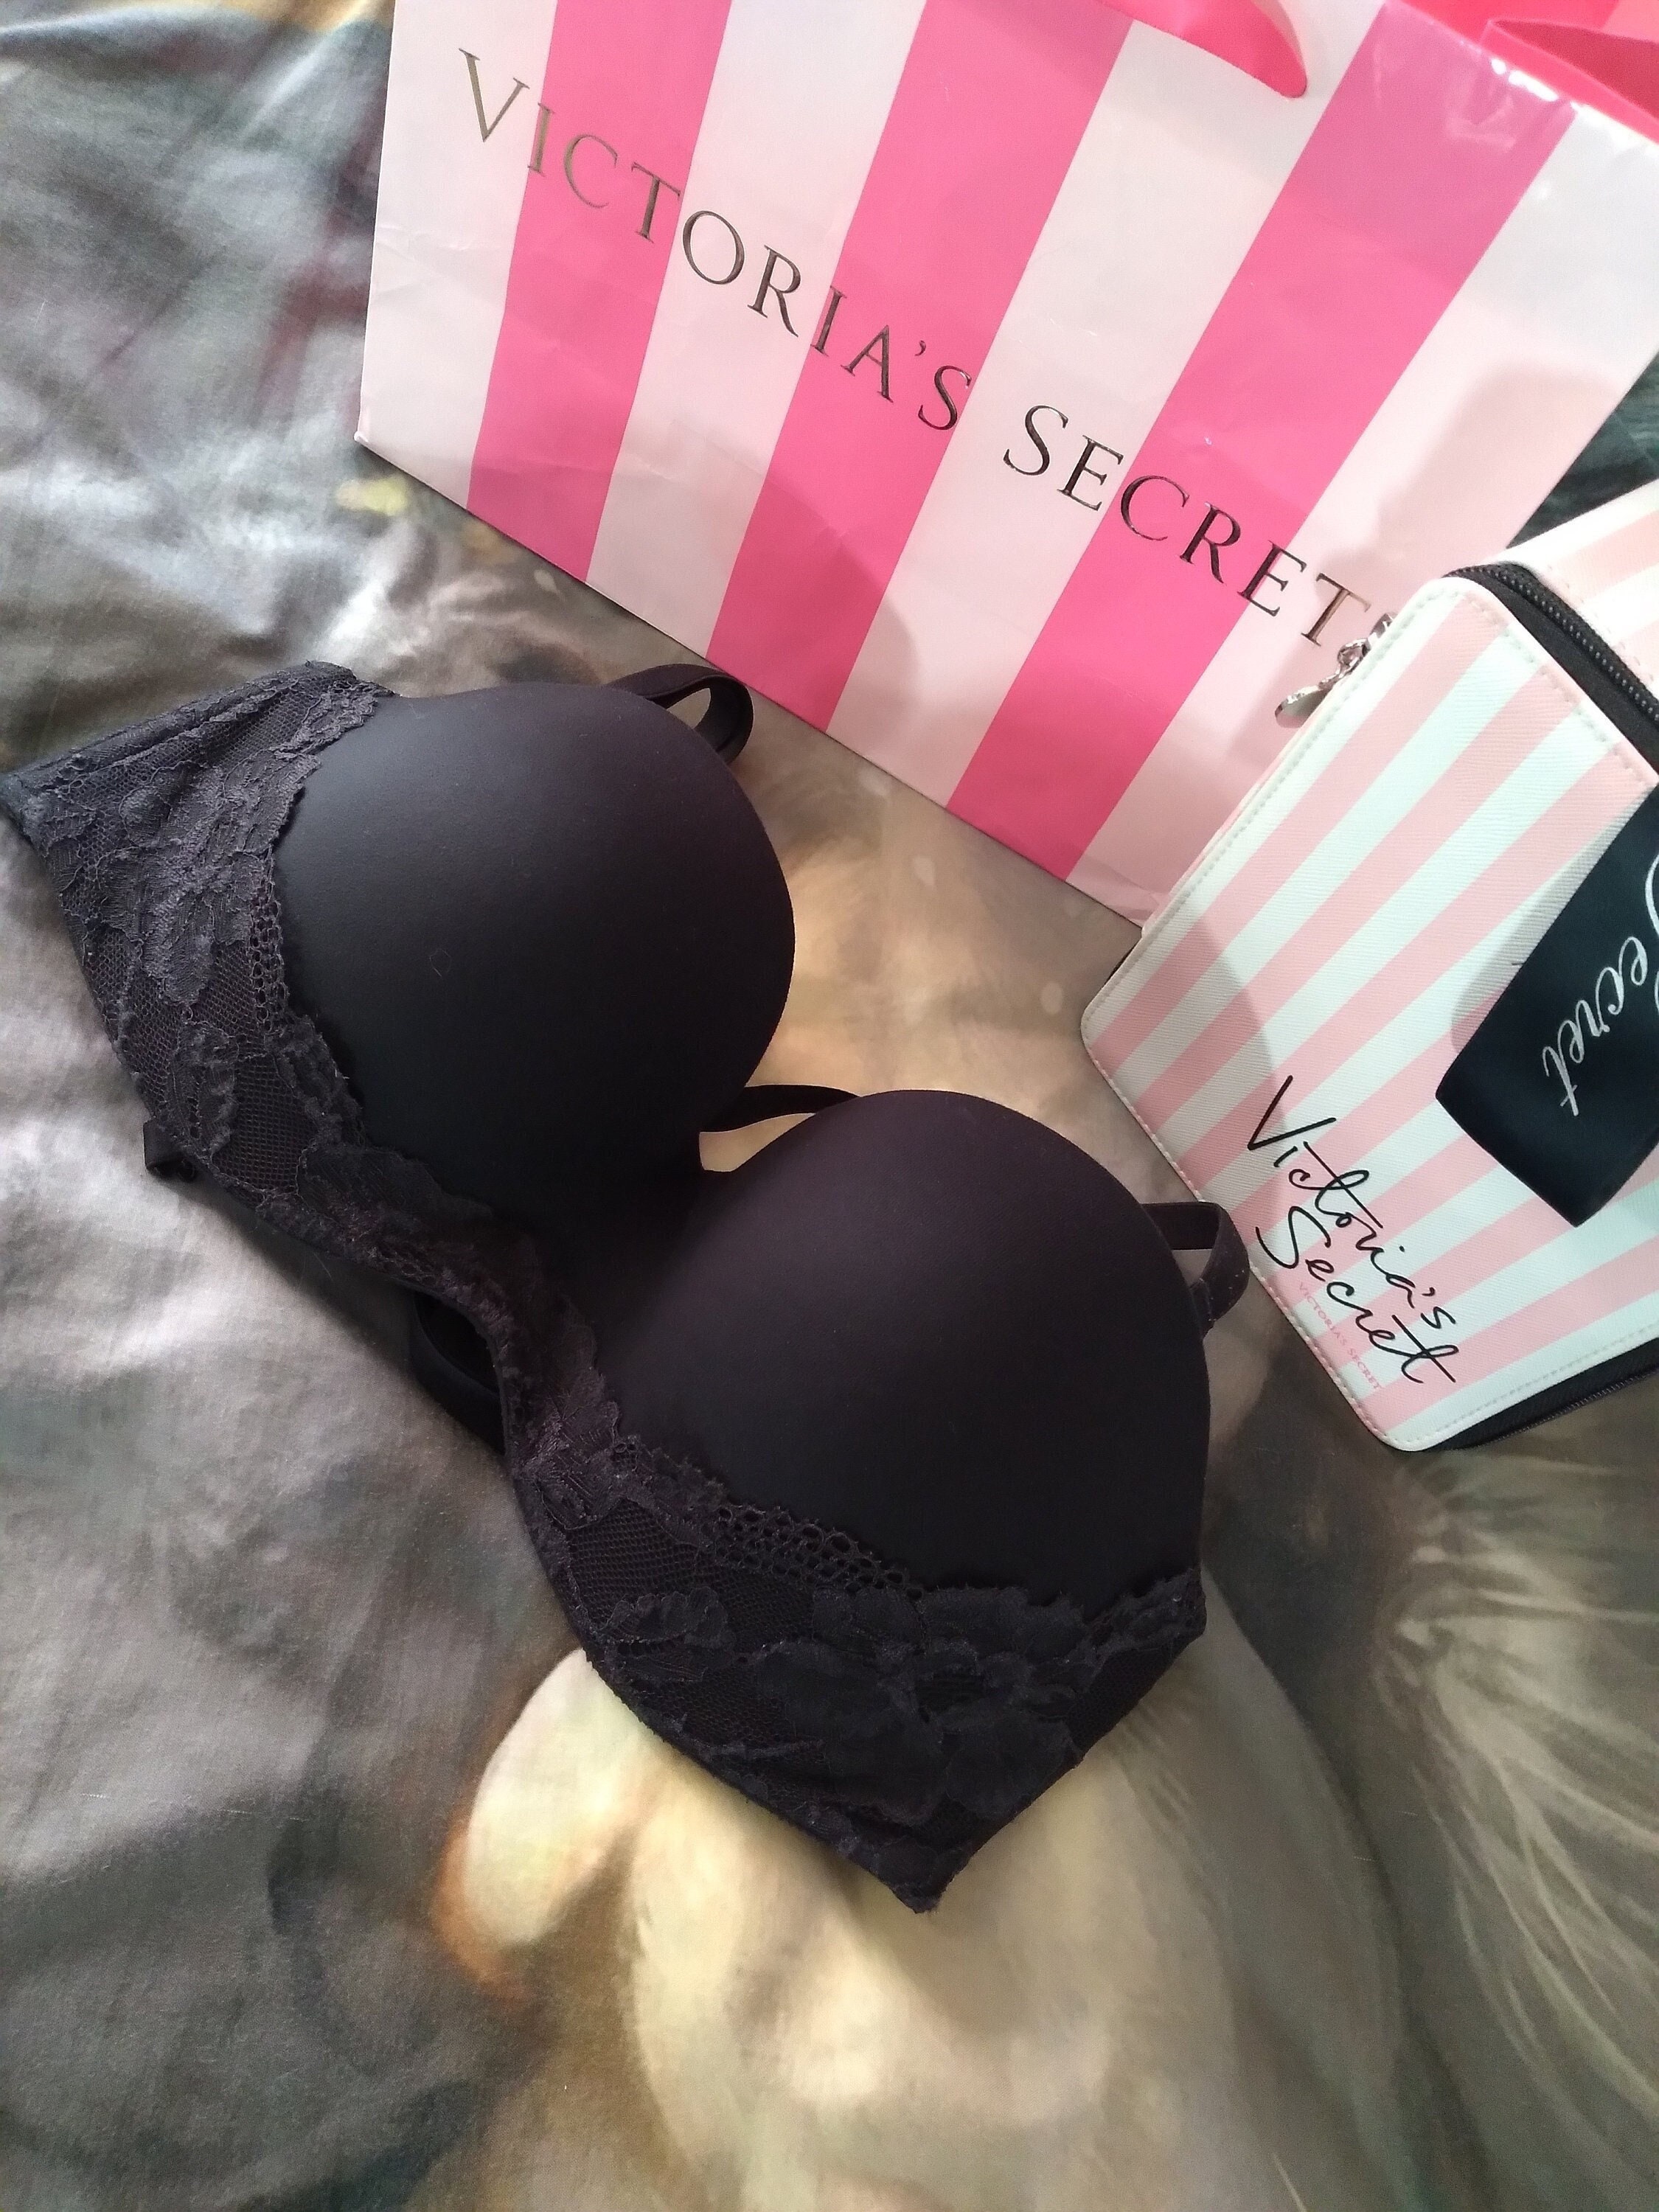 BNWT Victoria's Secret padded pink bra 34D & 2 pairs matching panties size  M